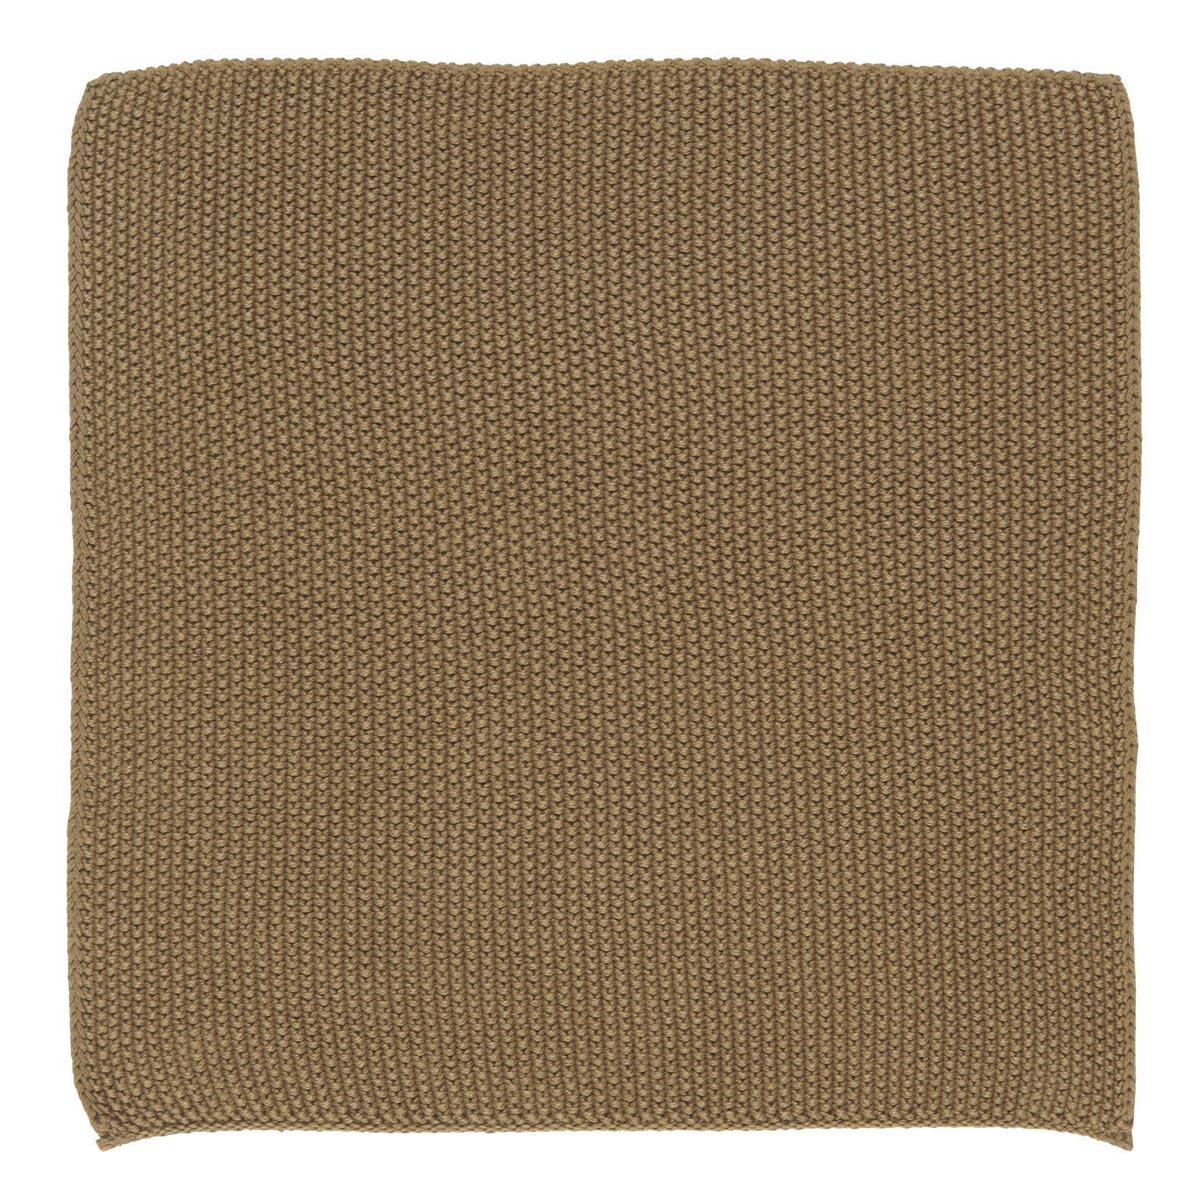 IB Laursen Mynte Cloth Honey knitted 6351-67